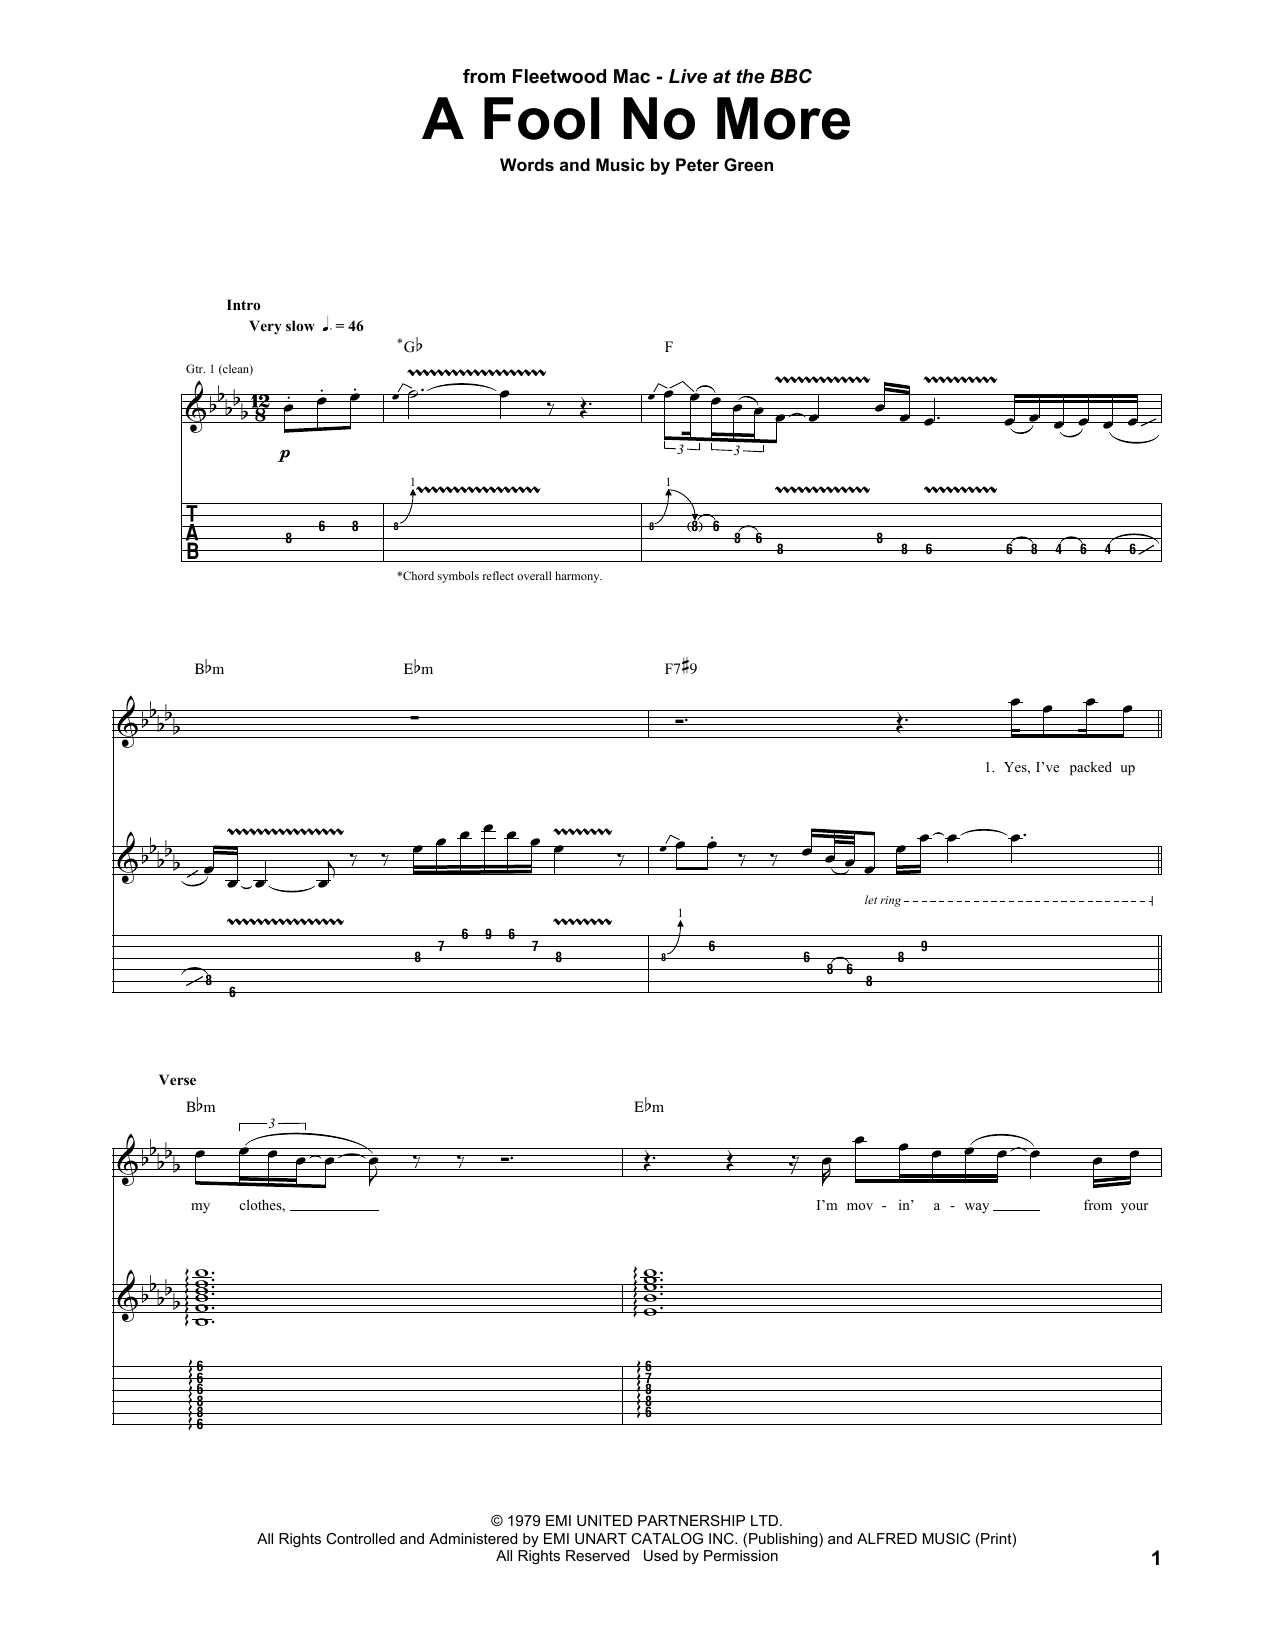 Fleetwood Mac A Fool No More Sheet Music Notes & Chords for Guitar Tab - Download or Print PDF